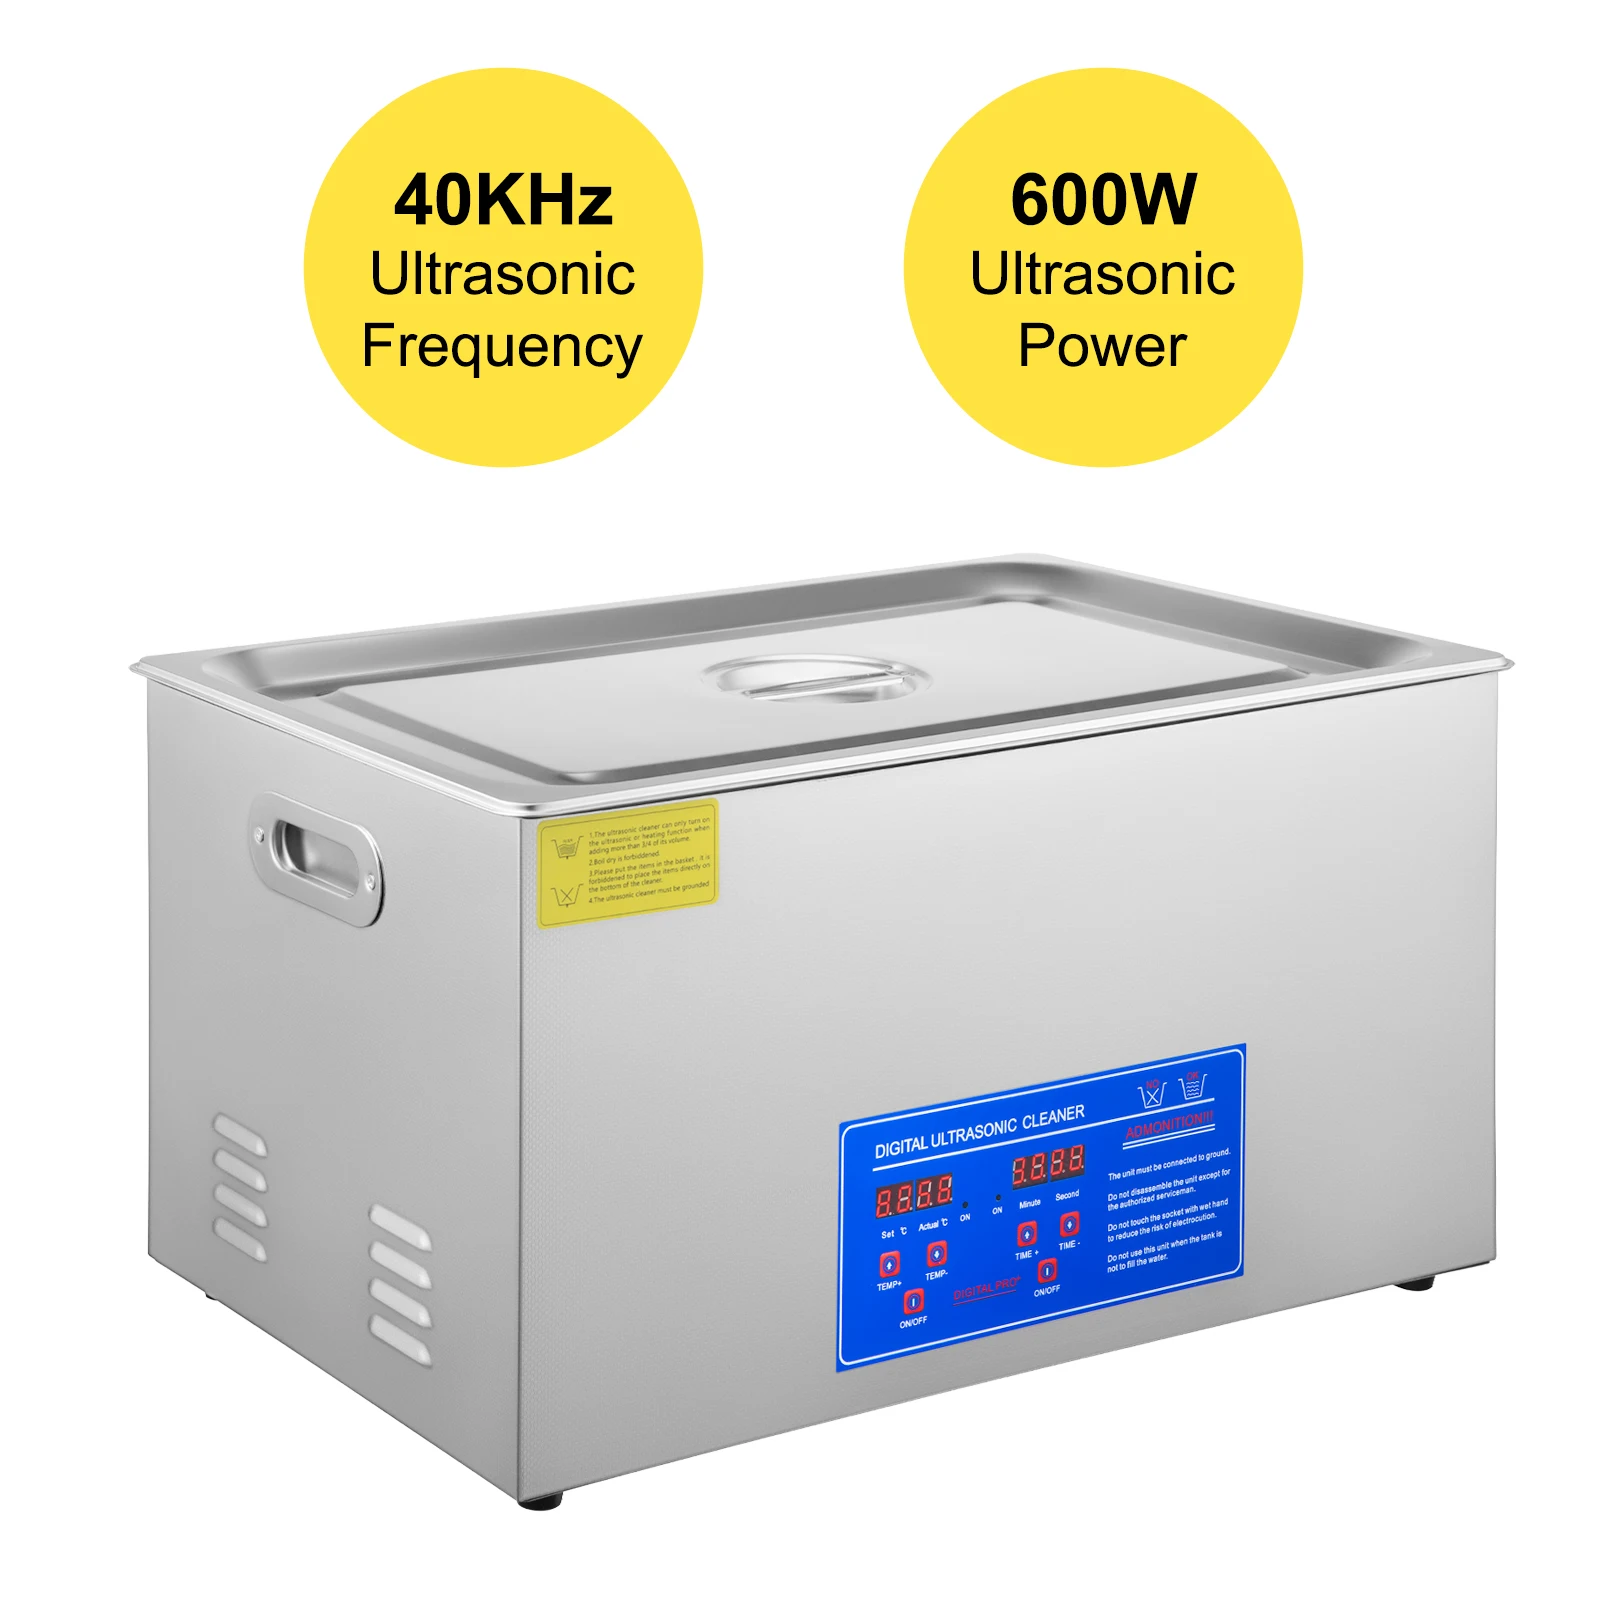 H6804aa113ce7413e8d8d773bae9db97fF VEVOR Ultrasonic Cleaner Home Appliance Ultrasound Cleaner Ultrasound Cleaning Machine 1.3-30L Portable Washing Machine